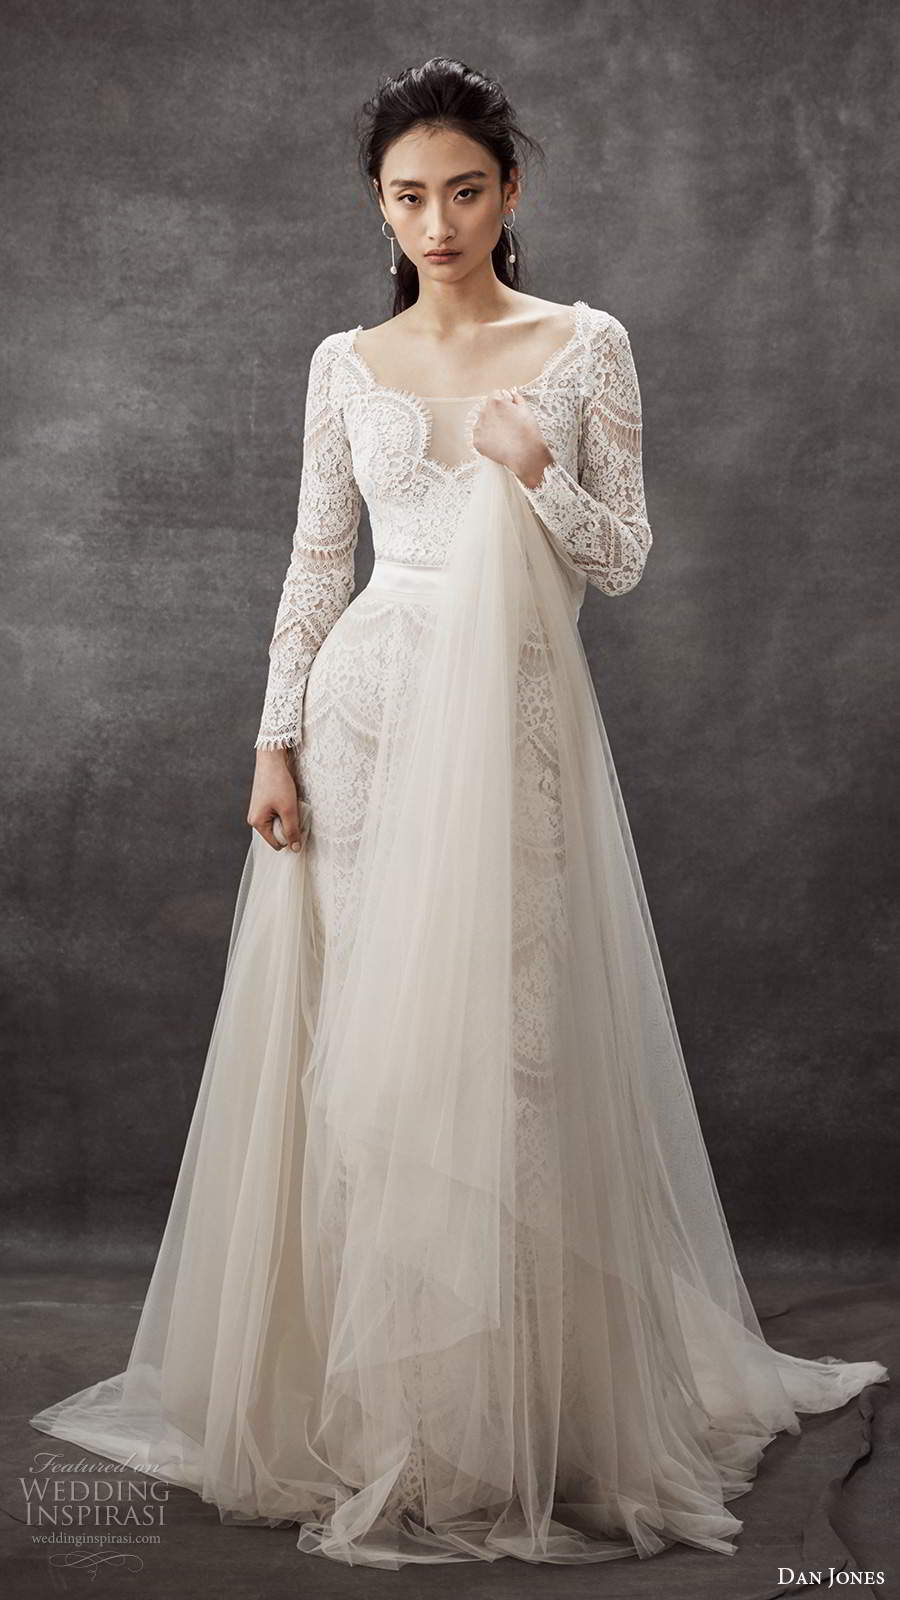 dan jones 2020 bridal illusion long sleeves v neckline lace sheath wedding dress sweep train a line overskirt (3) mv